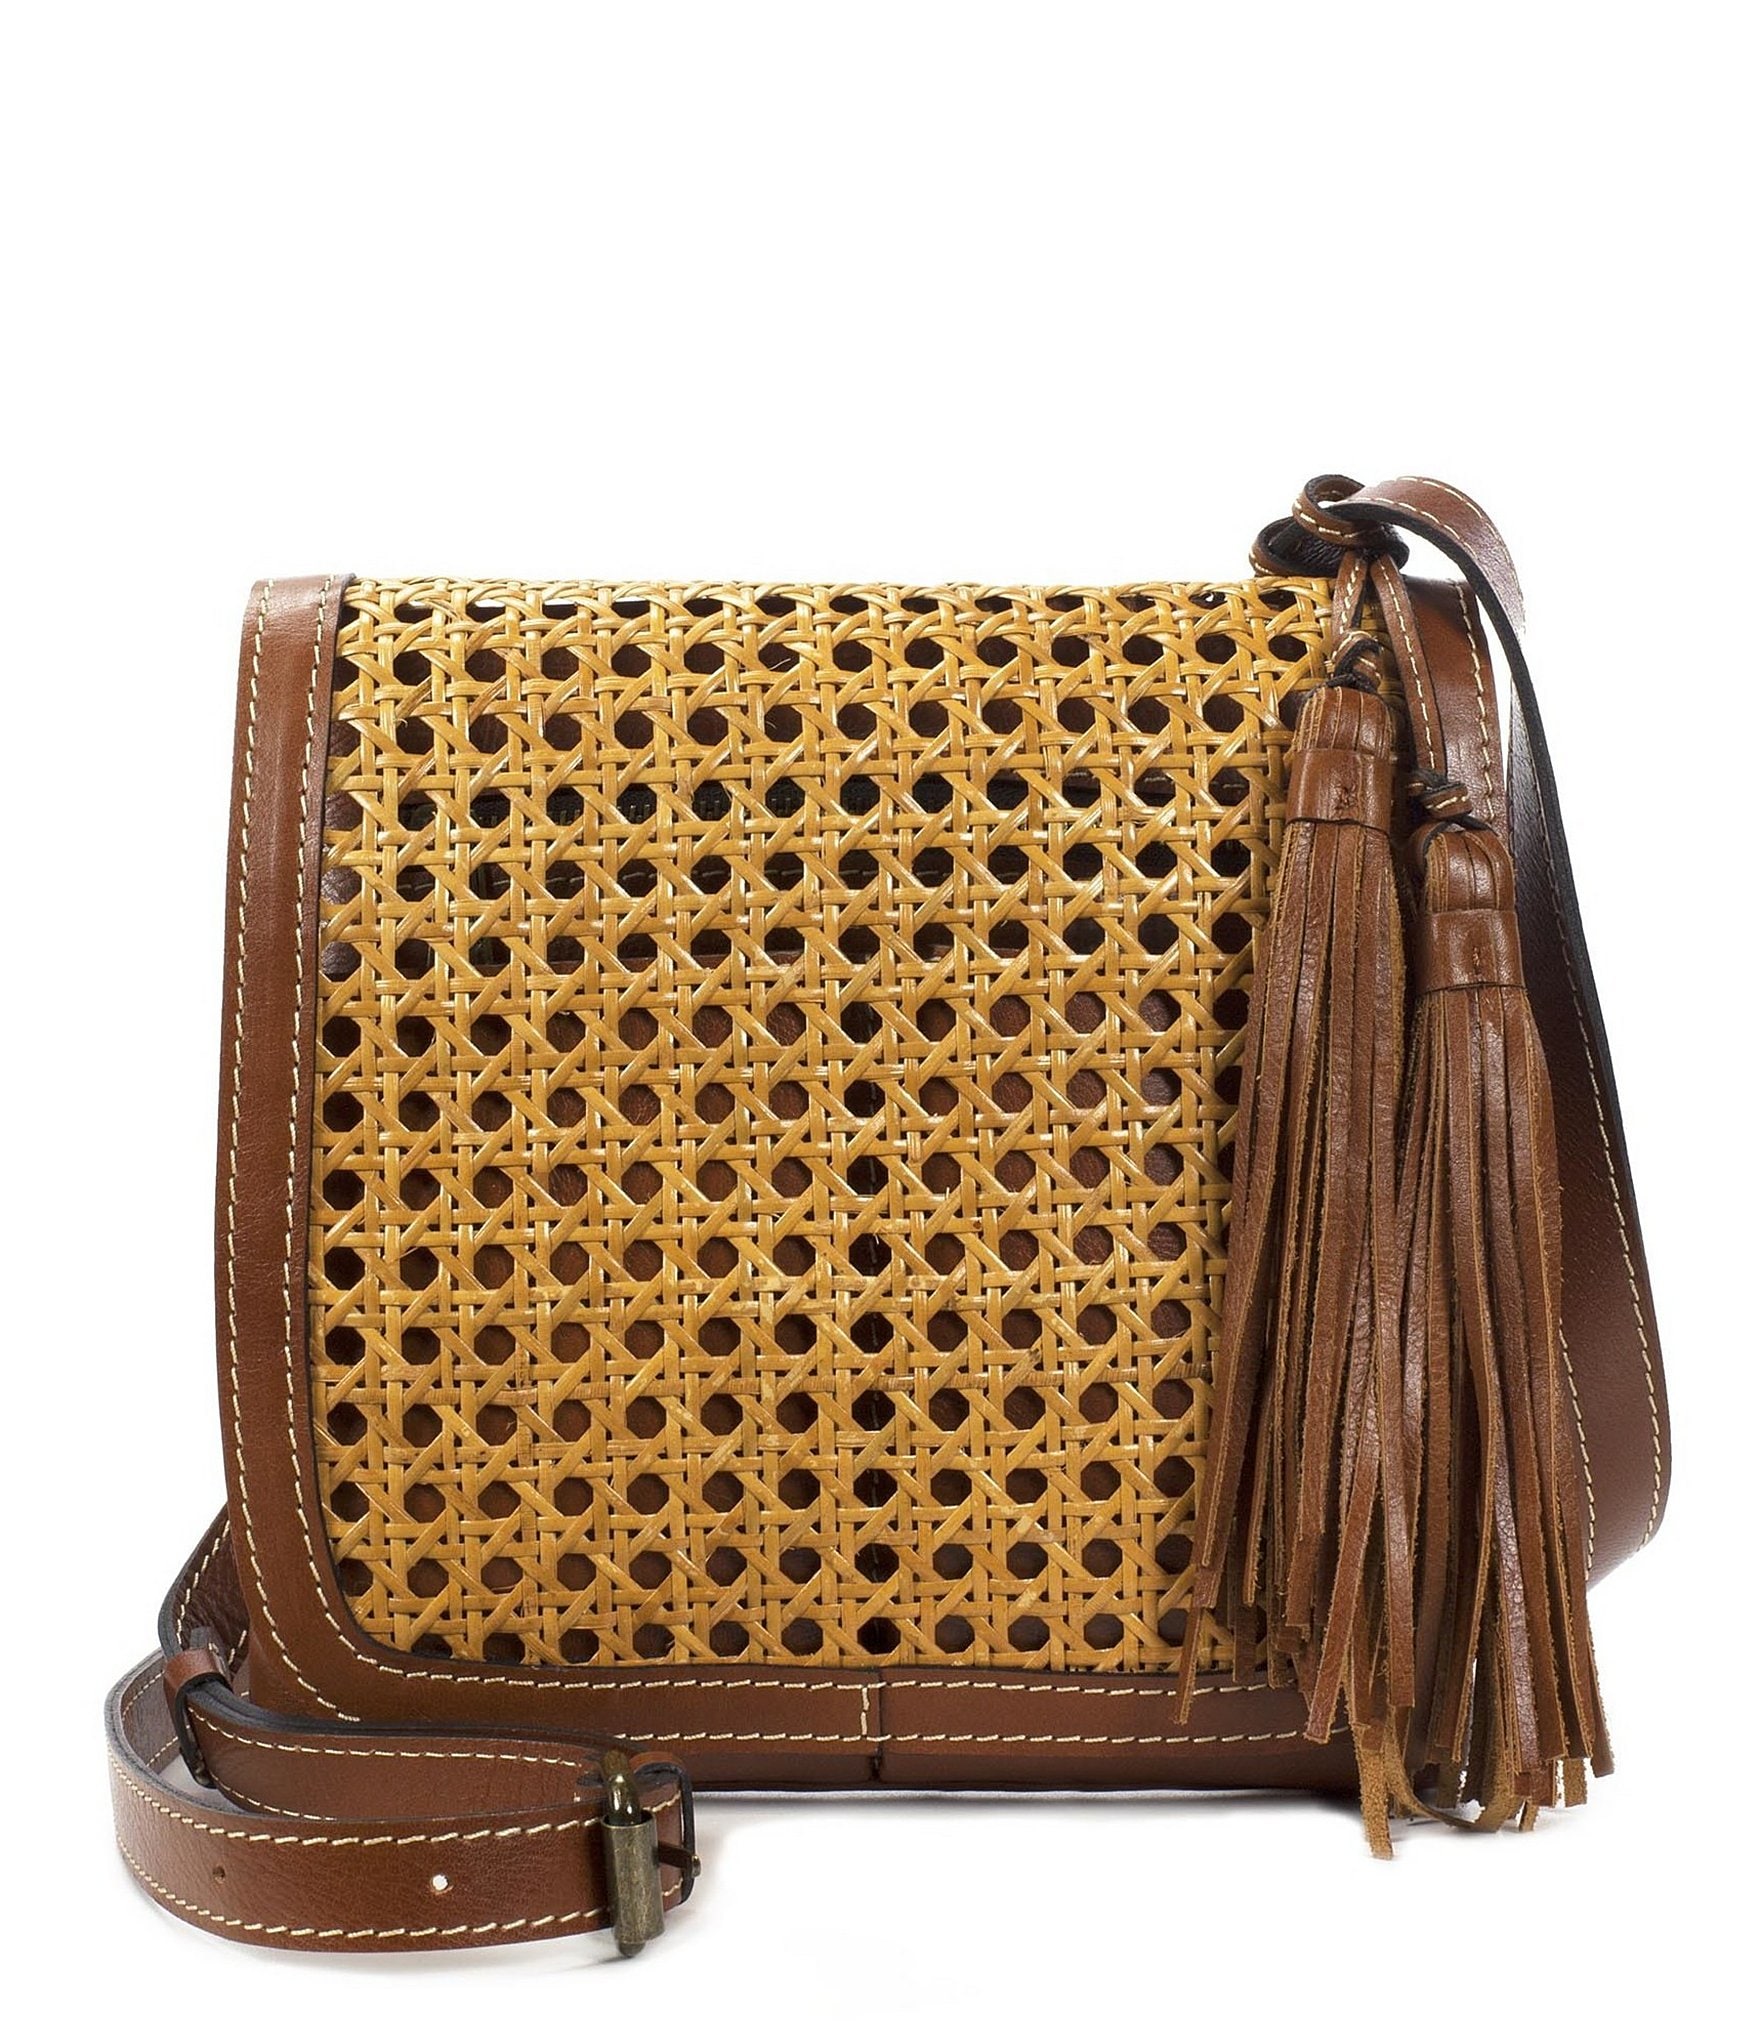 Vintage Designer Handbags Dillards | Confederated Tribes of the Umatilla Indian Reservation